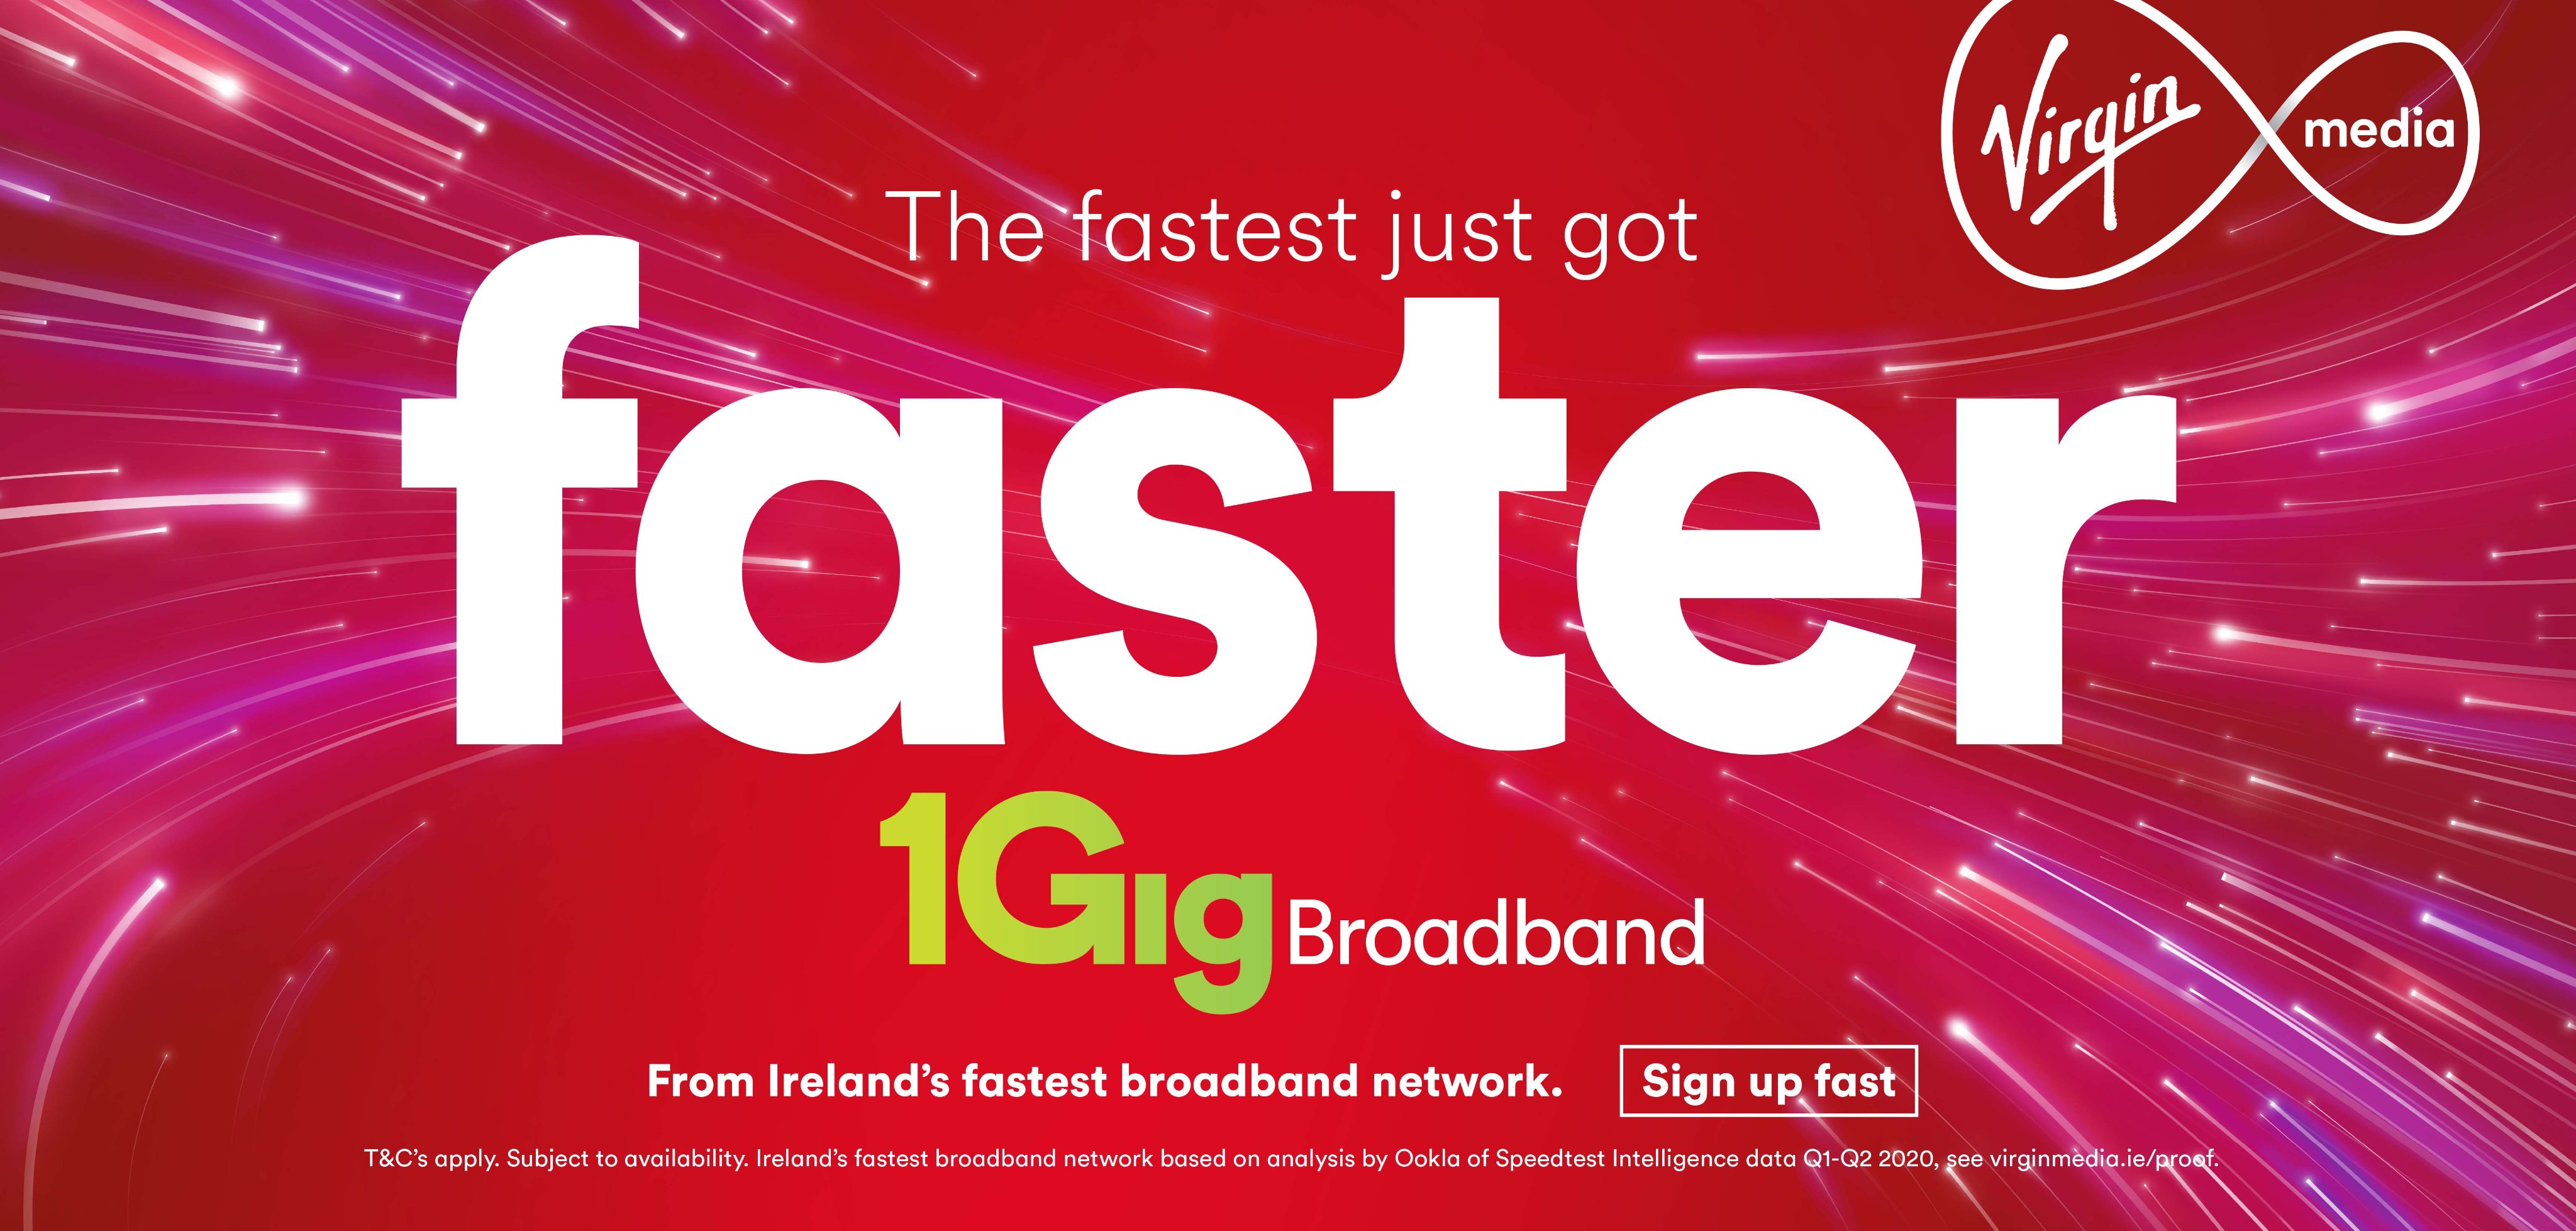 desayuno prisa Vergonzoso Virgin Media Ireland on Twitter: "Ireland's fastest broadband network just  got even faster! Virgin Media switches on 1 Gigabit Broadband network  covering almost 1 Million homes across Ireland, available immediately from  today.